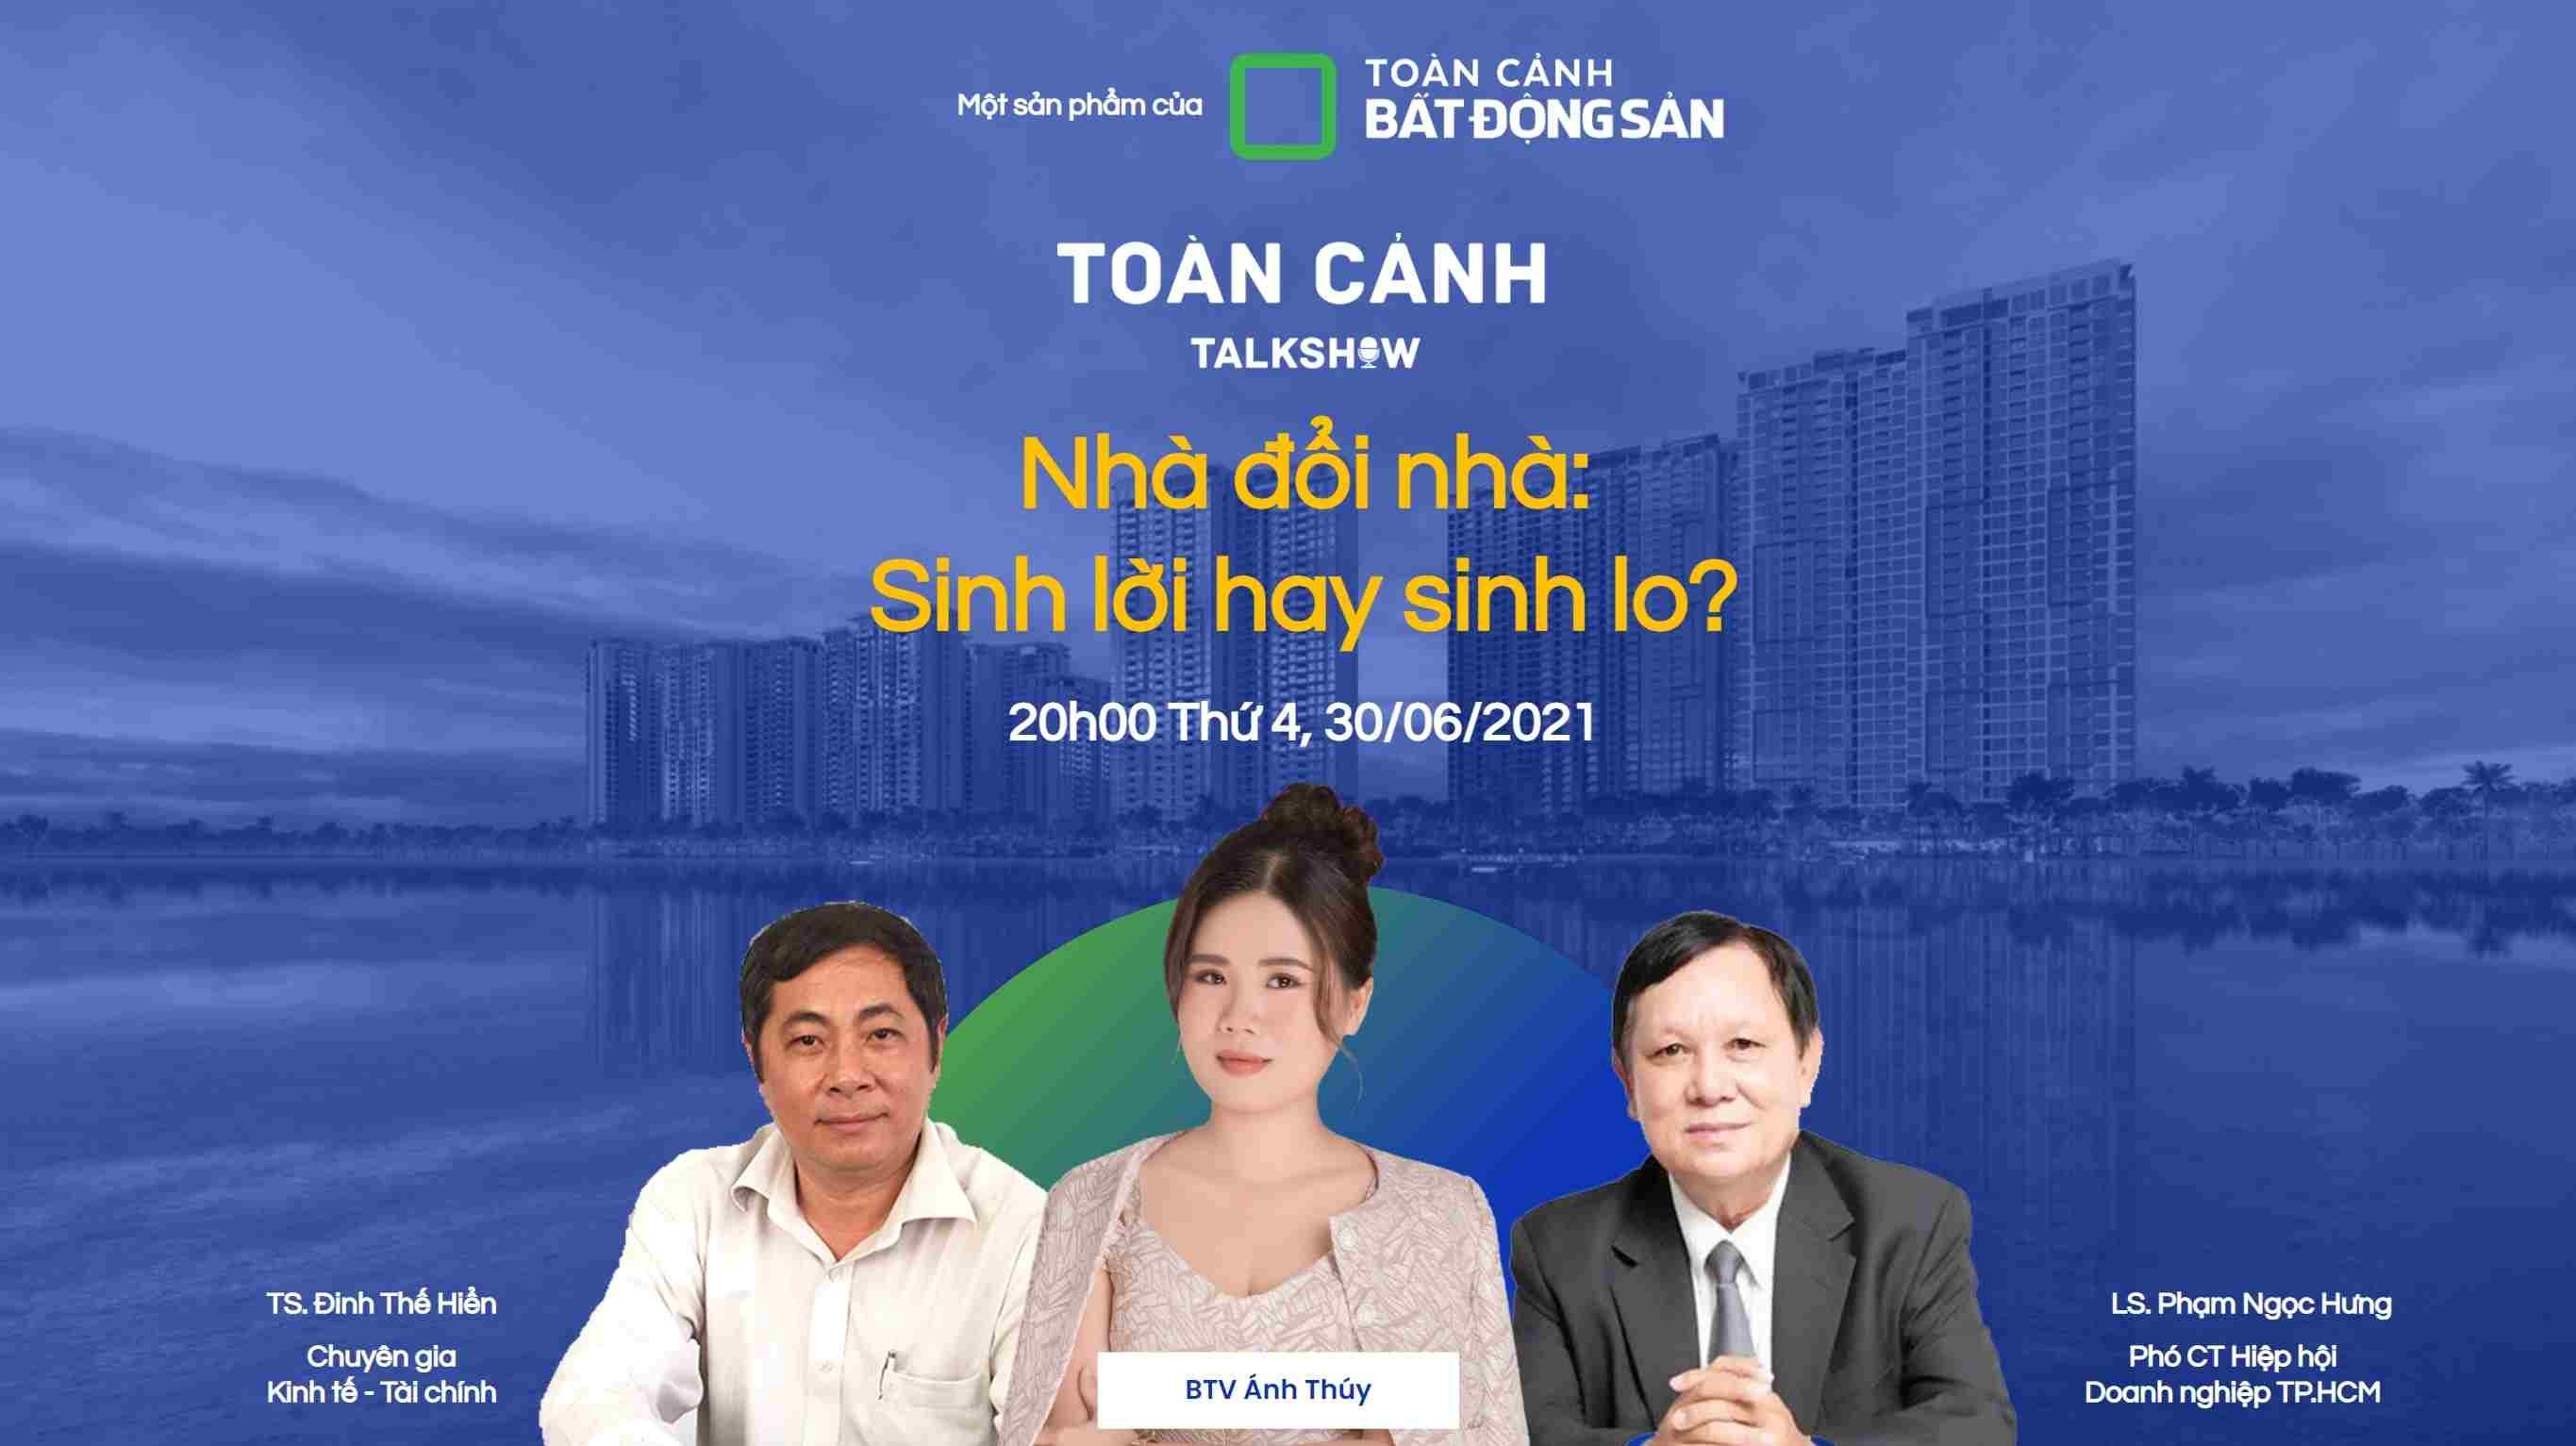 toan-canh-bat-dong-san-nha-doi-nha-1629048507.jpg